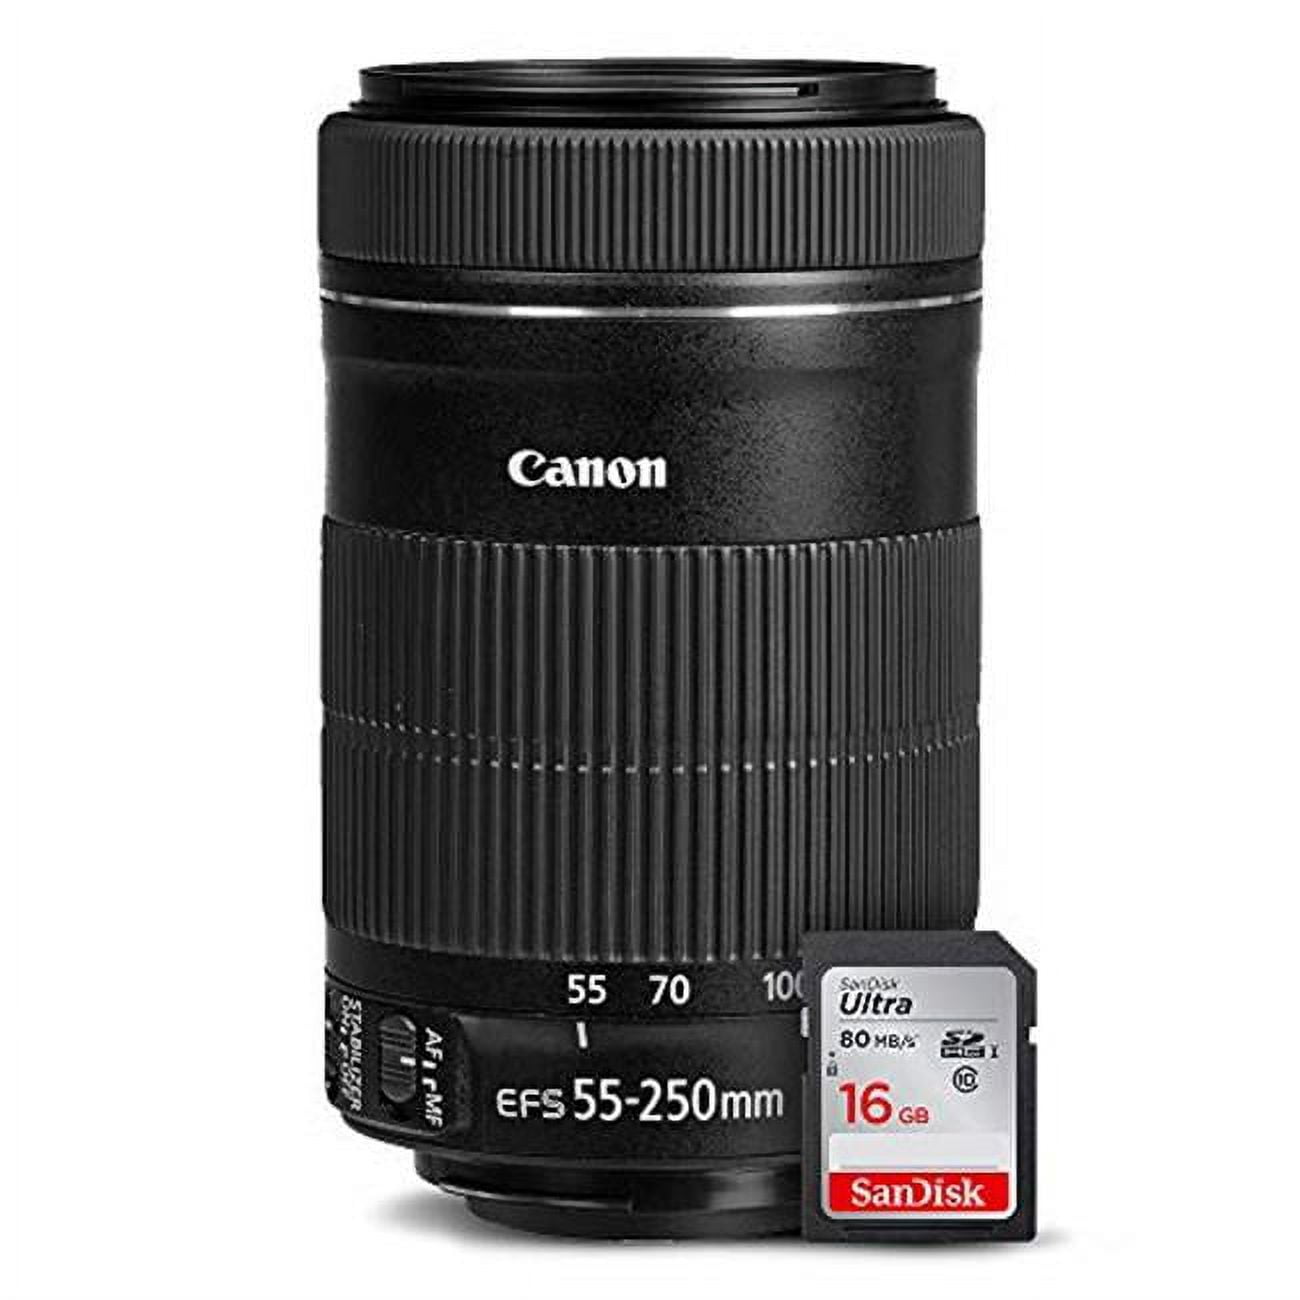 Canon CANON-LENS-55-250-KIT112-NFBA EF-S 55-250 mm f & 4-5.6 IS STM Lens  Bundle